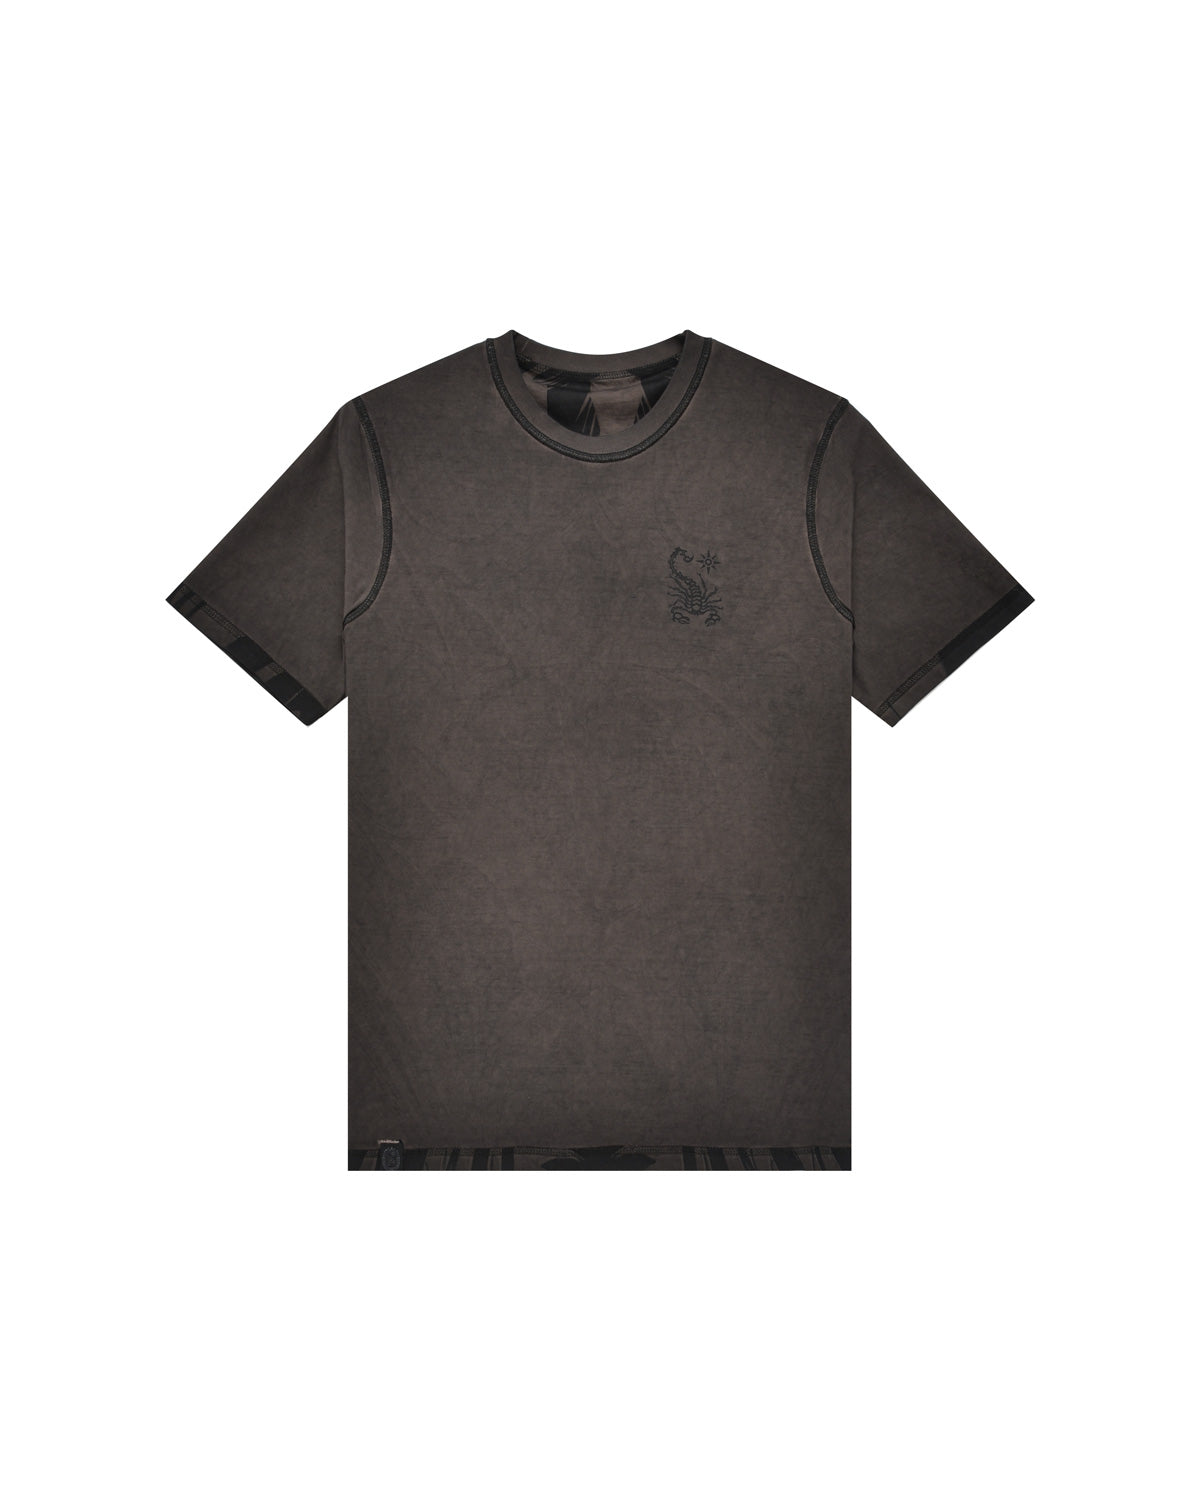 Man | "Tribal Scorpion" Reversible T-Shirt In 100% Cotton